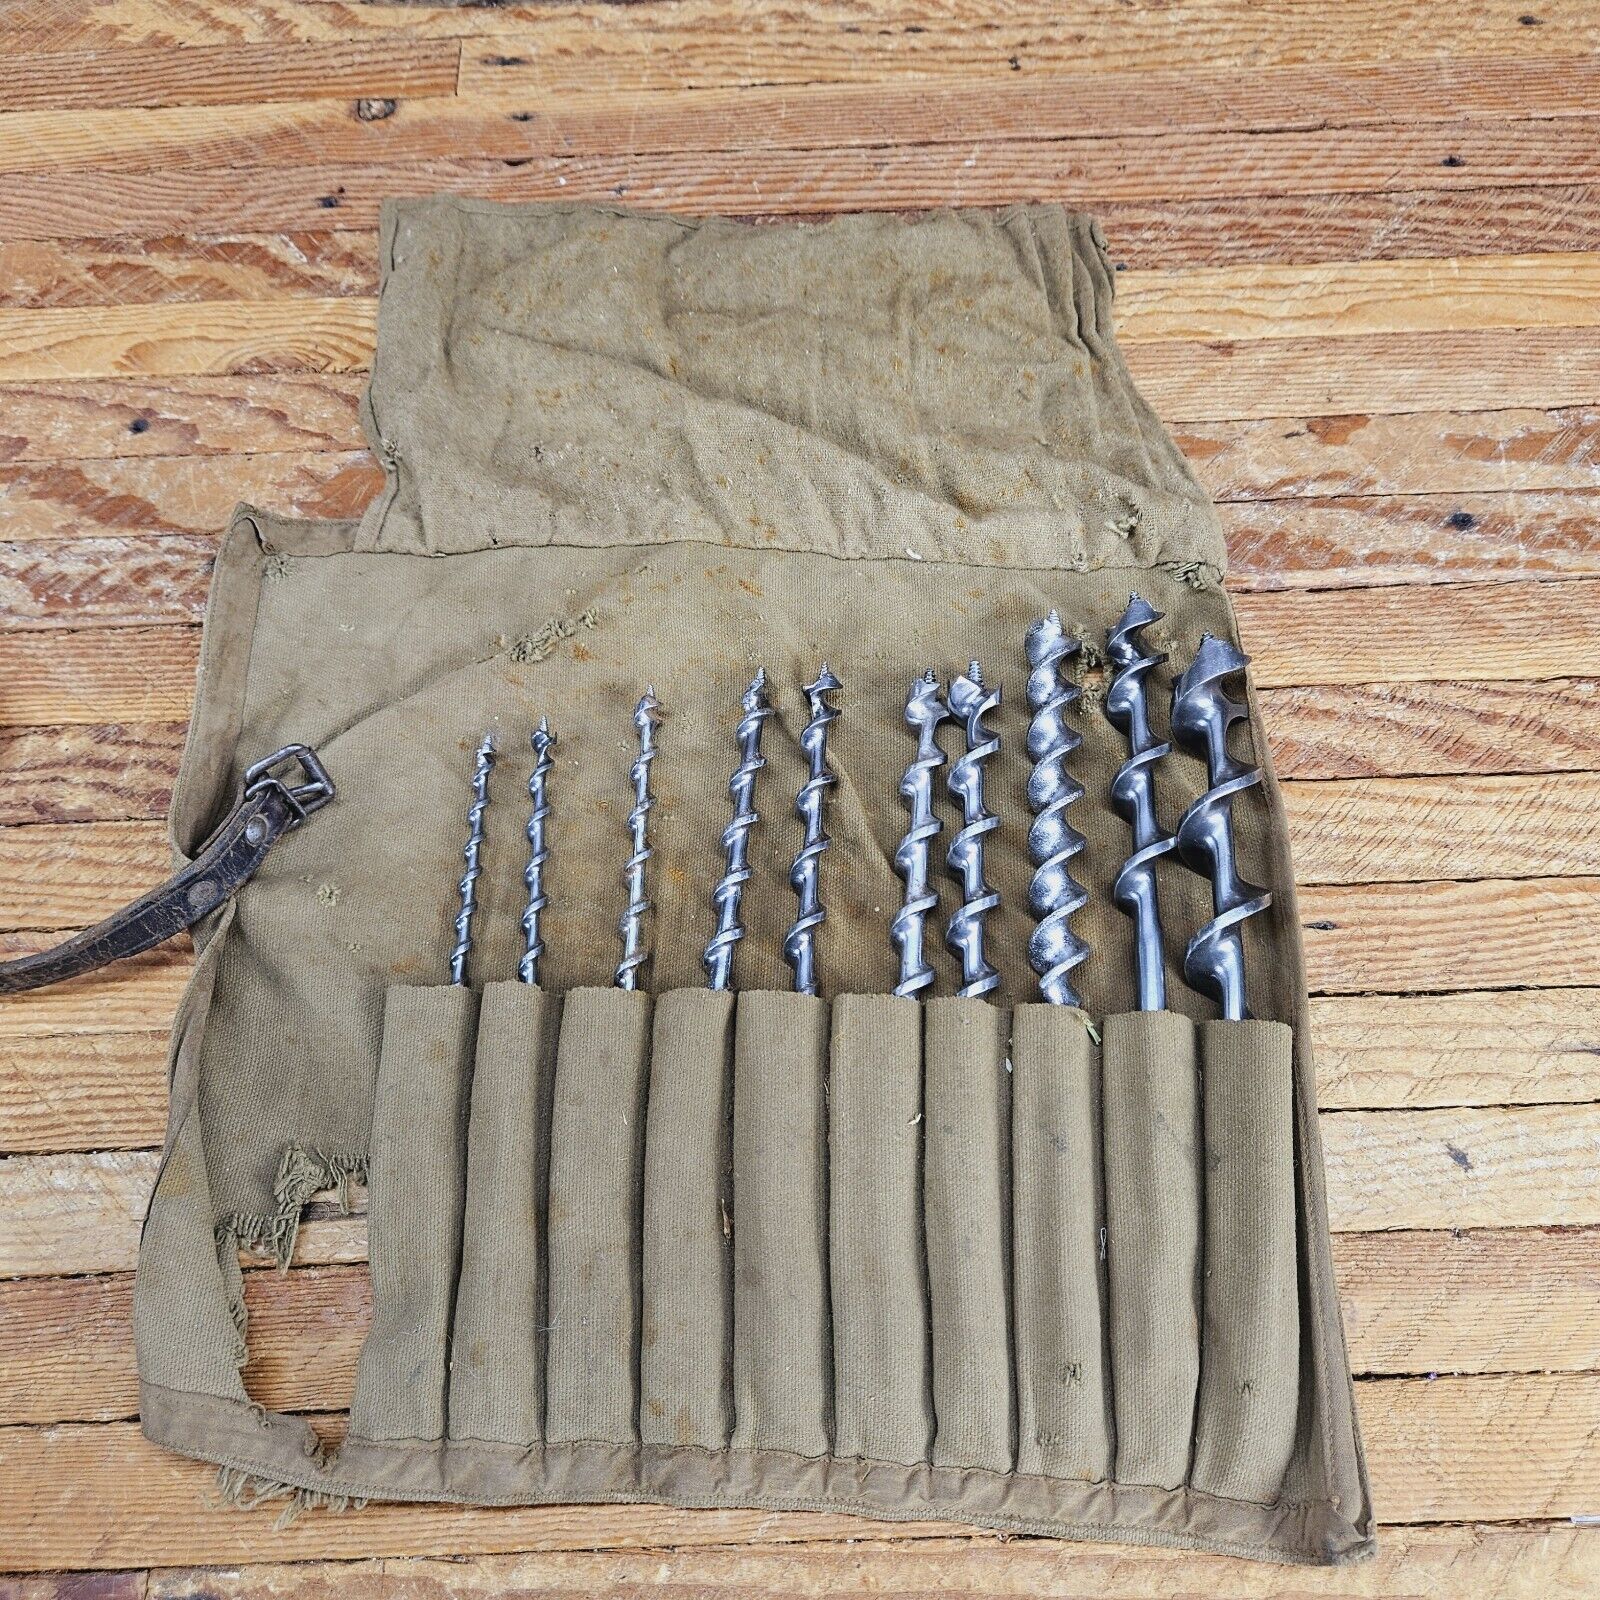 Vintage Dunlap Irwin set of 10 Auger Woodworking Hand Drill Brace Bits